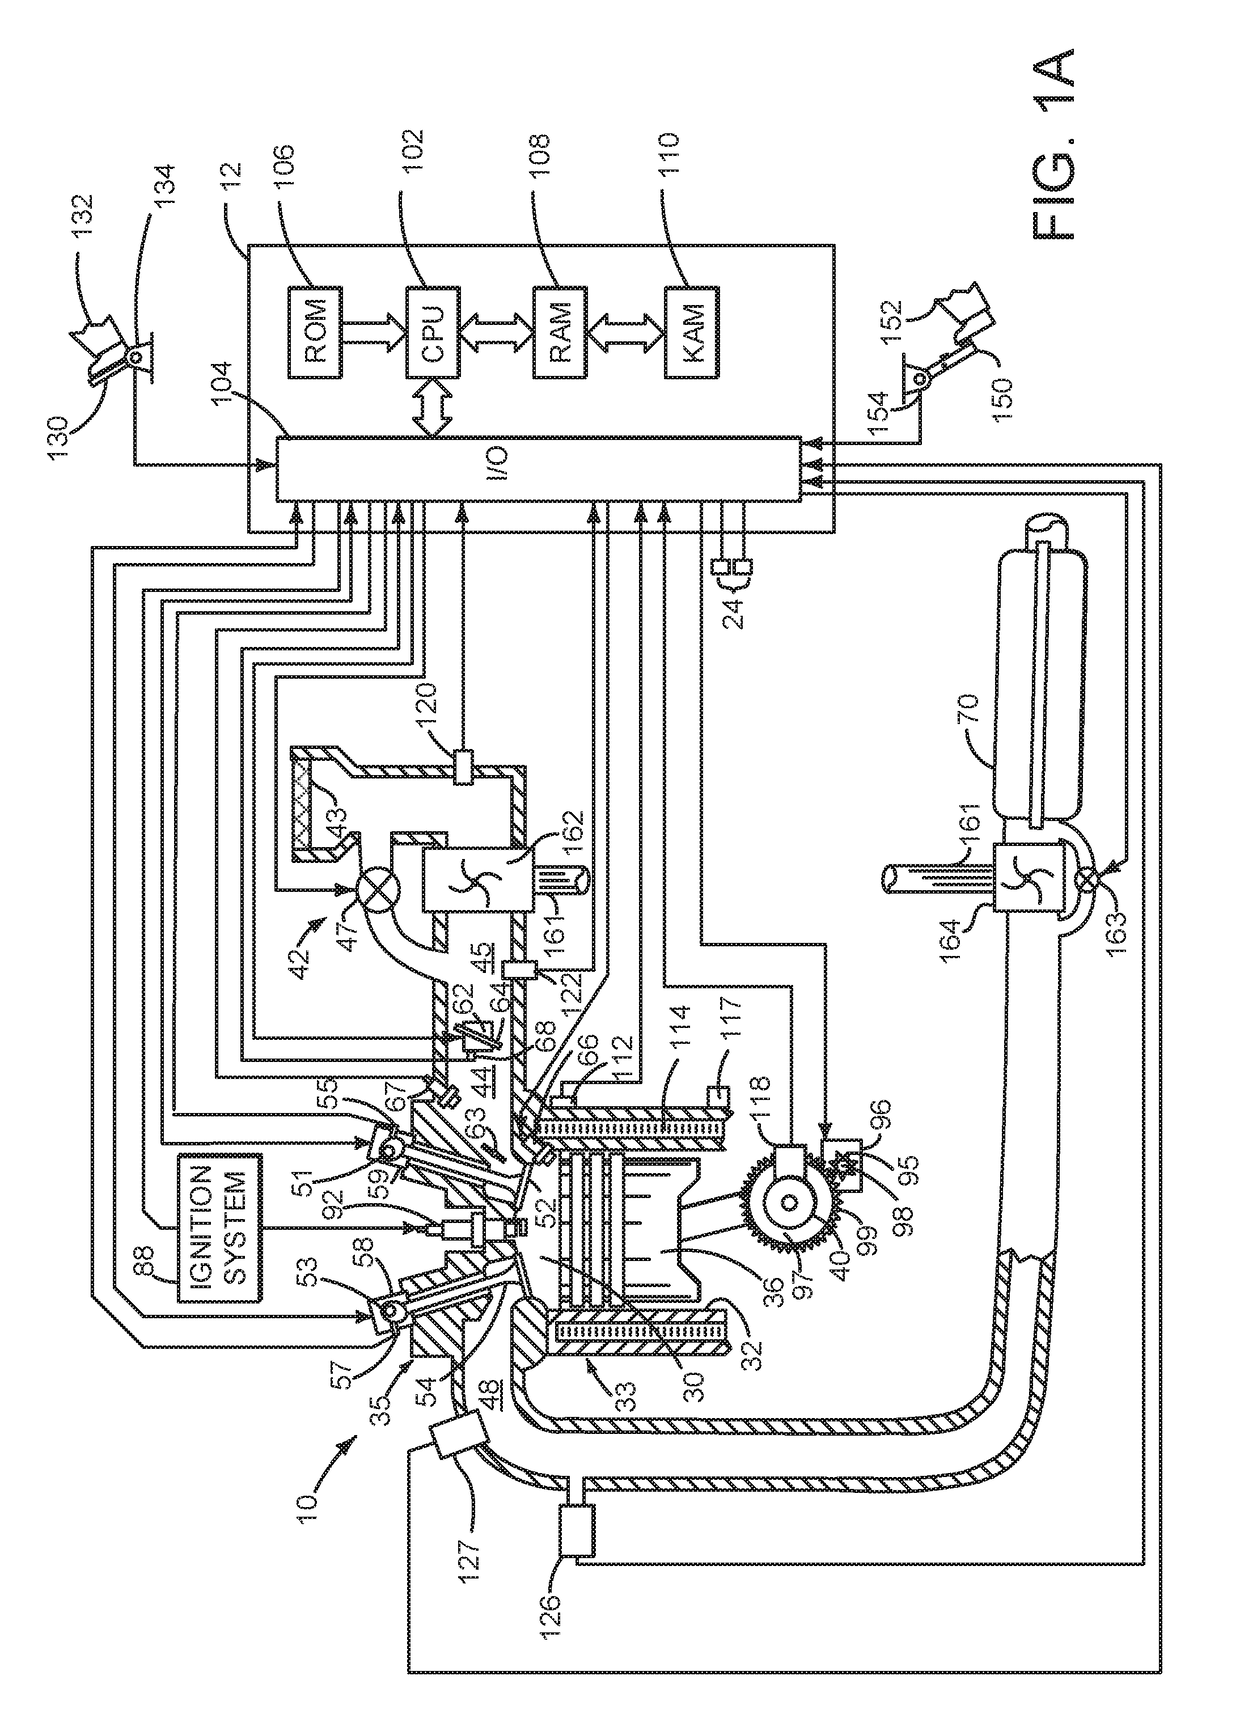 System for deactivating engine cylinders